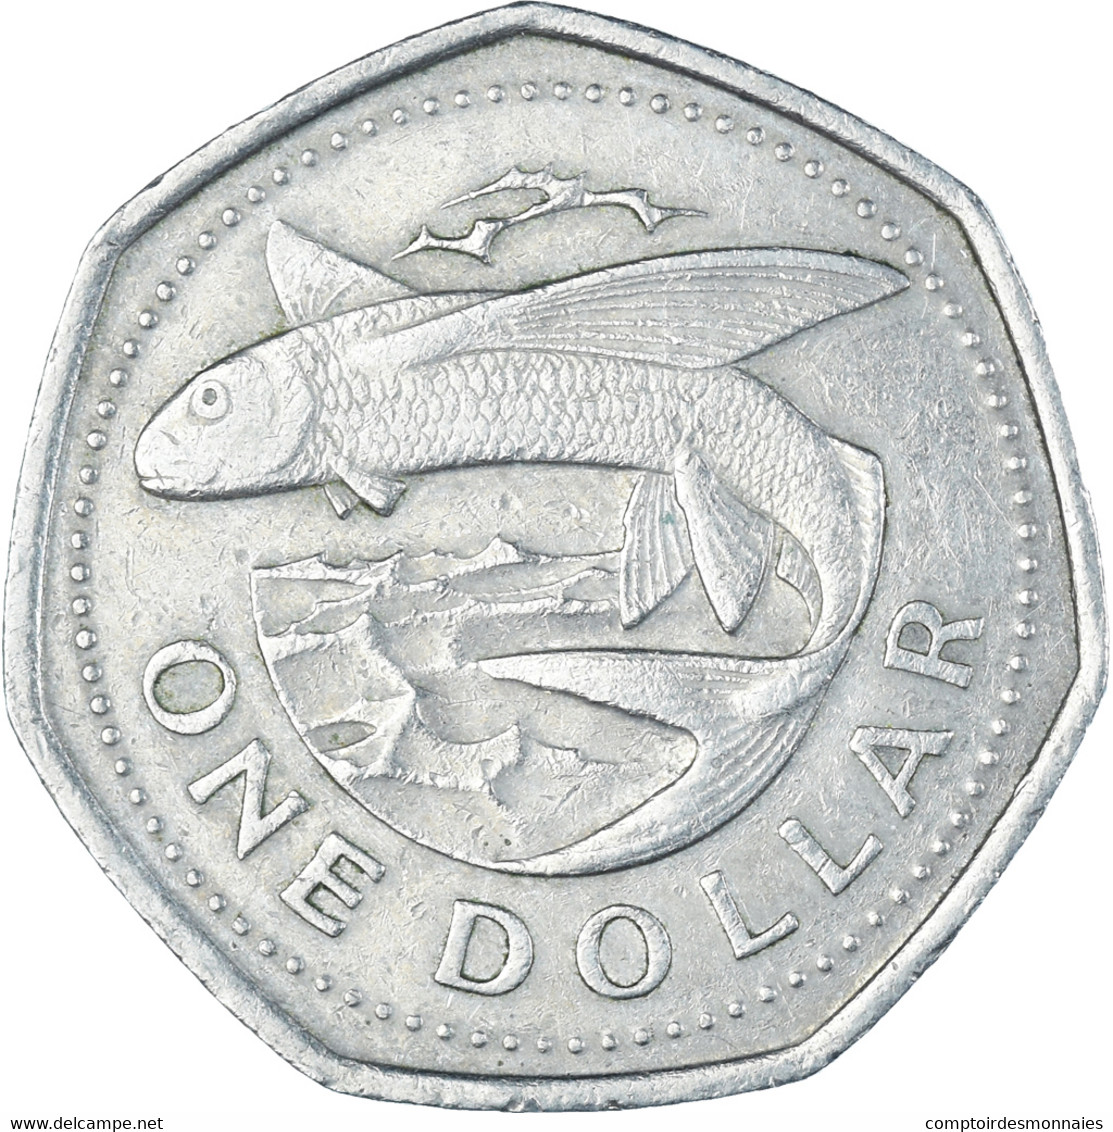 Monnaie, Barbade, Dollar, 1988 - Barbades